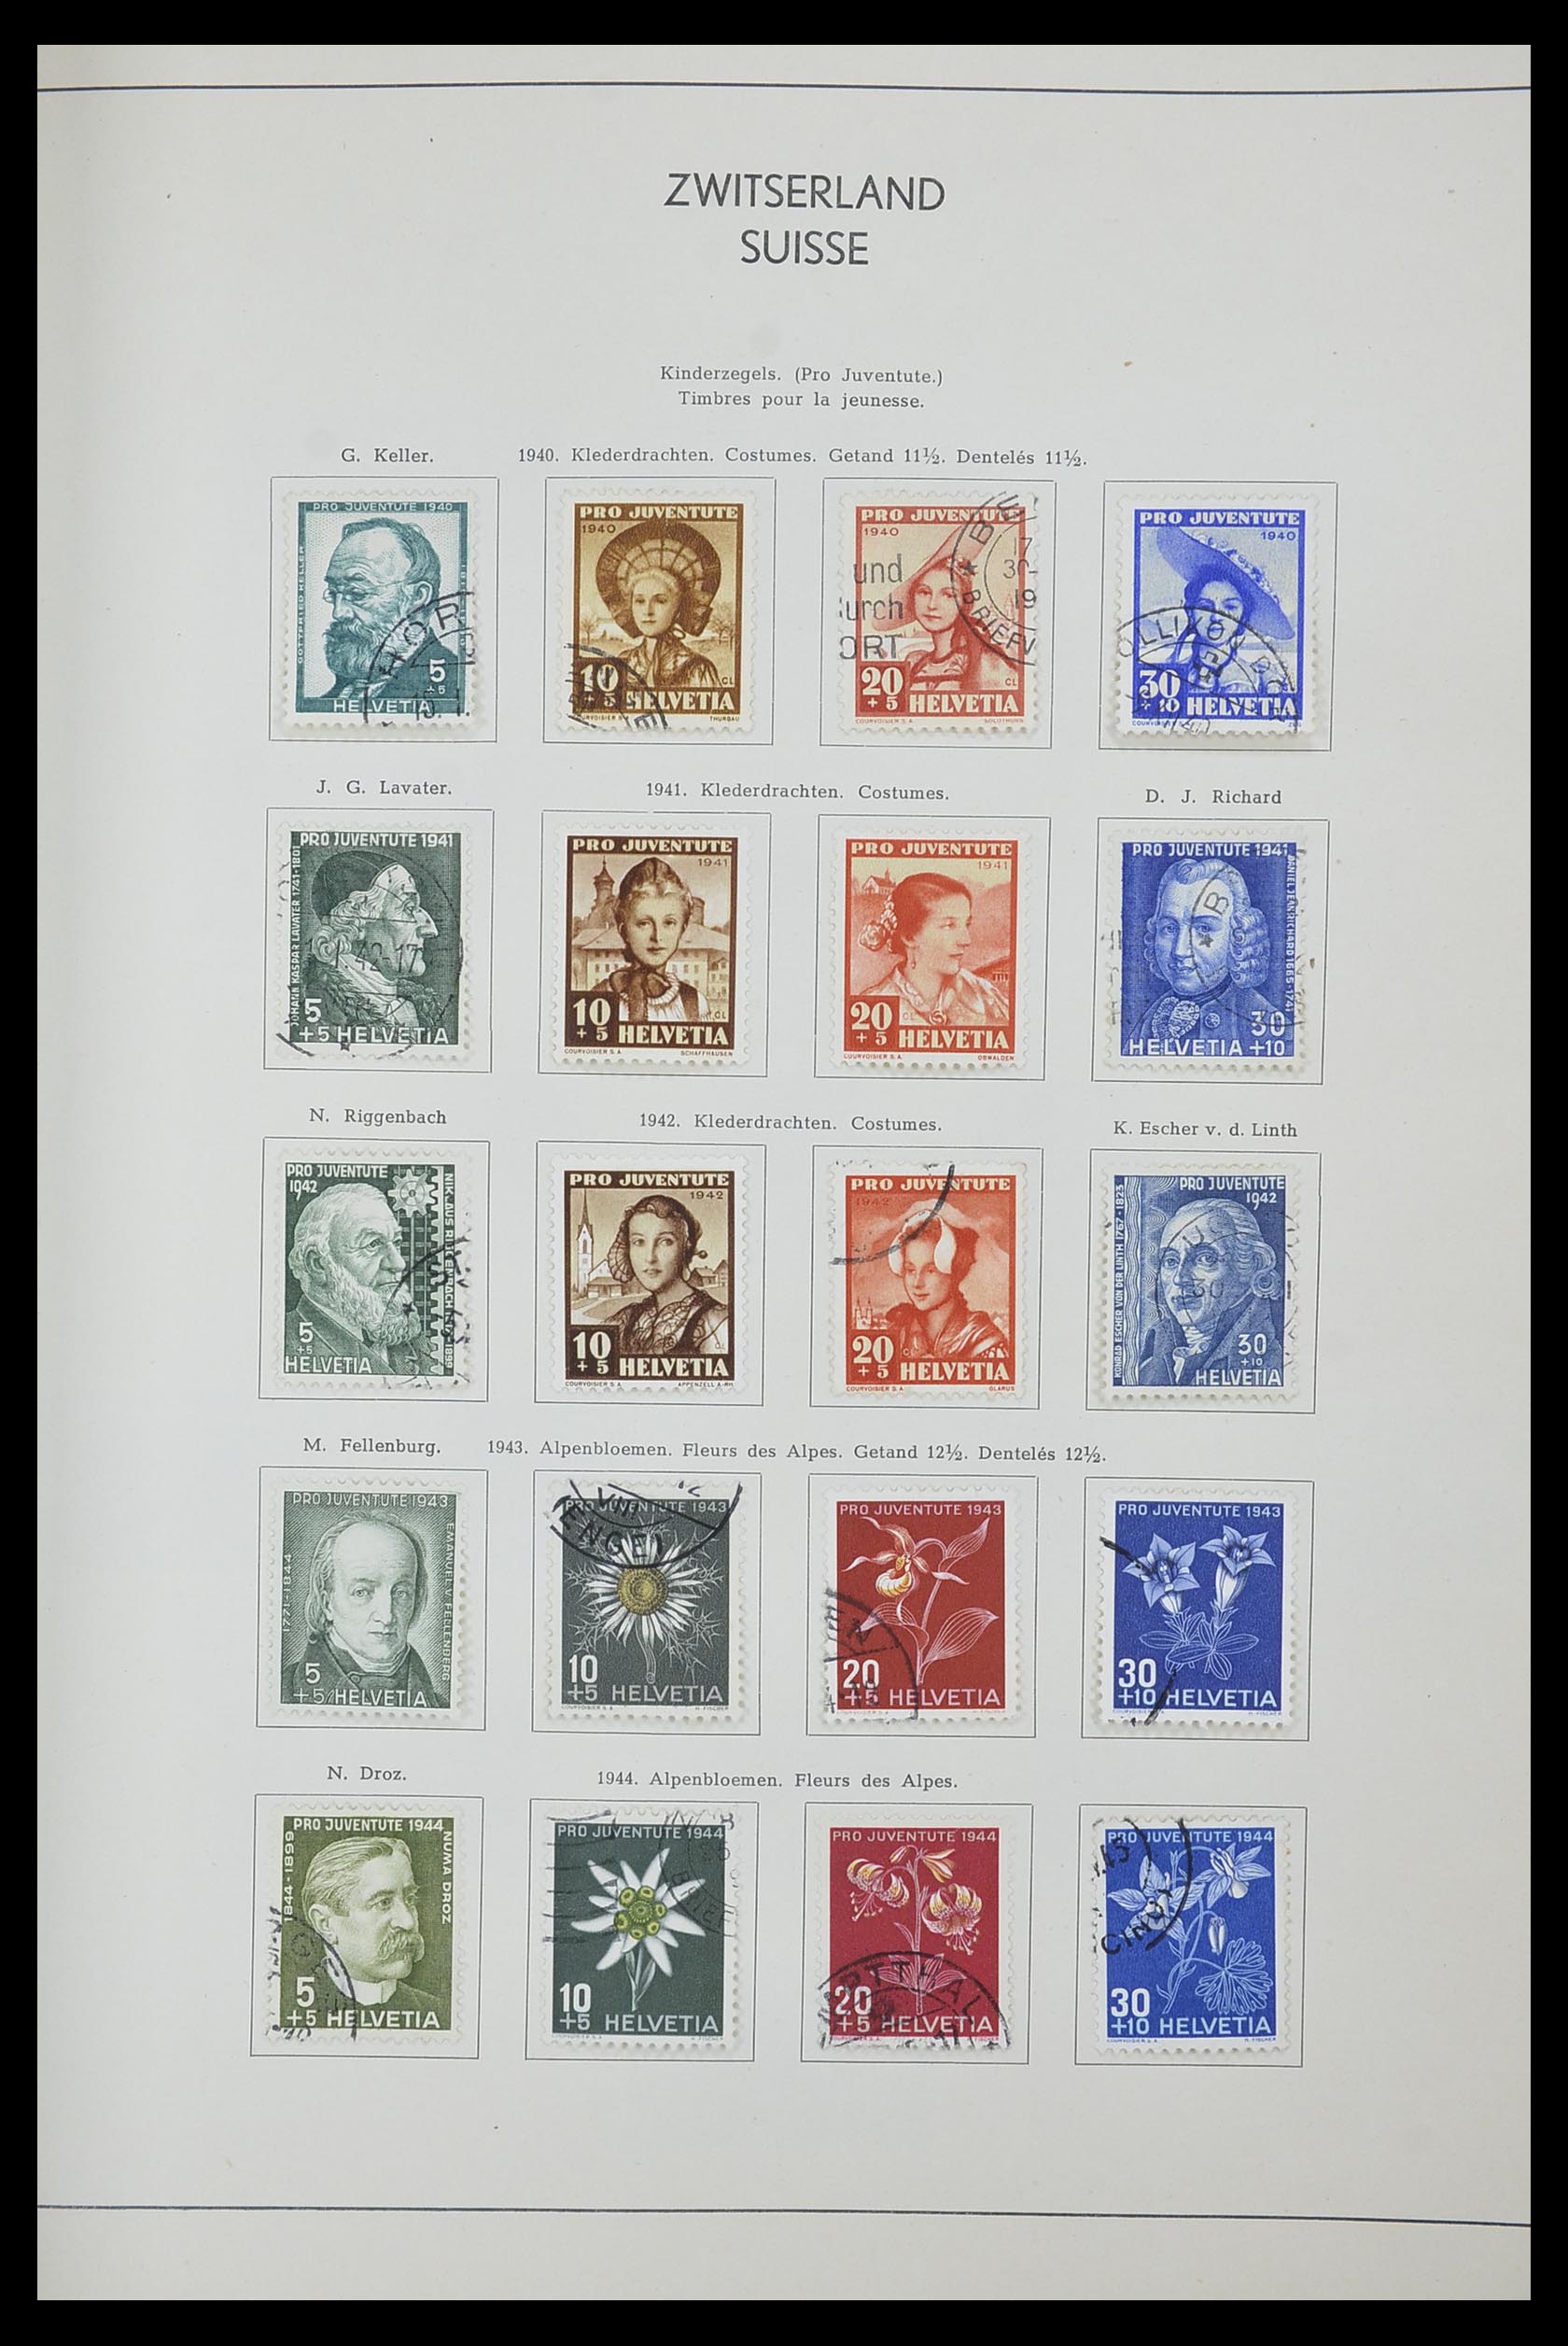 33601 019 - Stamp collection 33601 Switzerland 1854-1985.